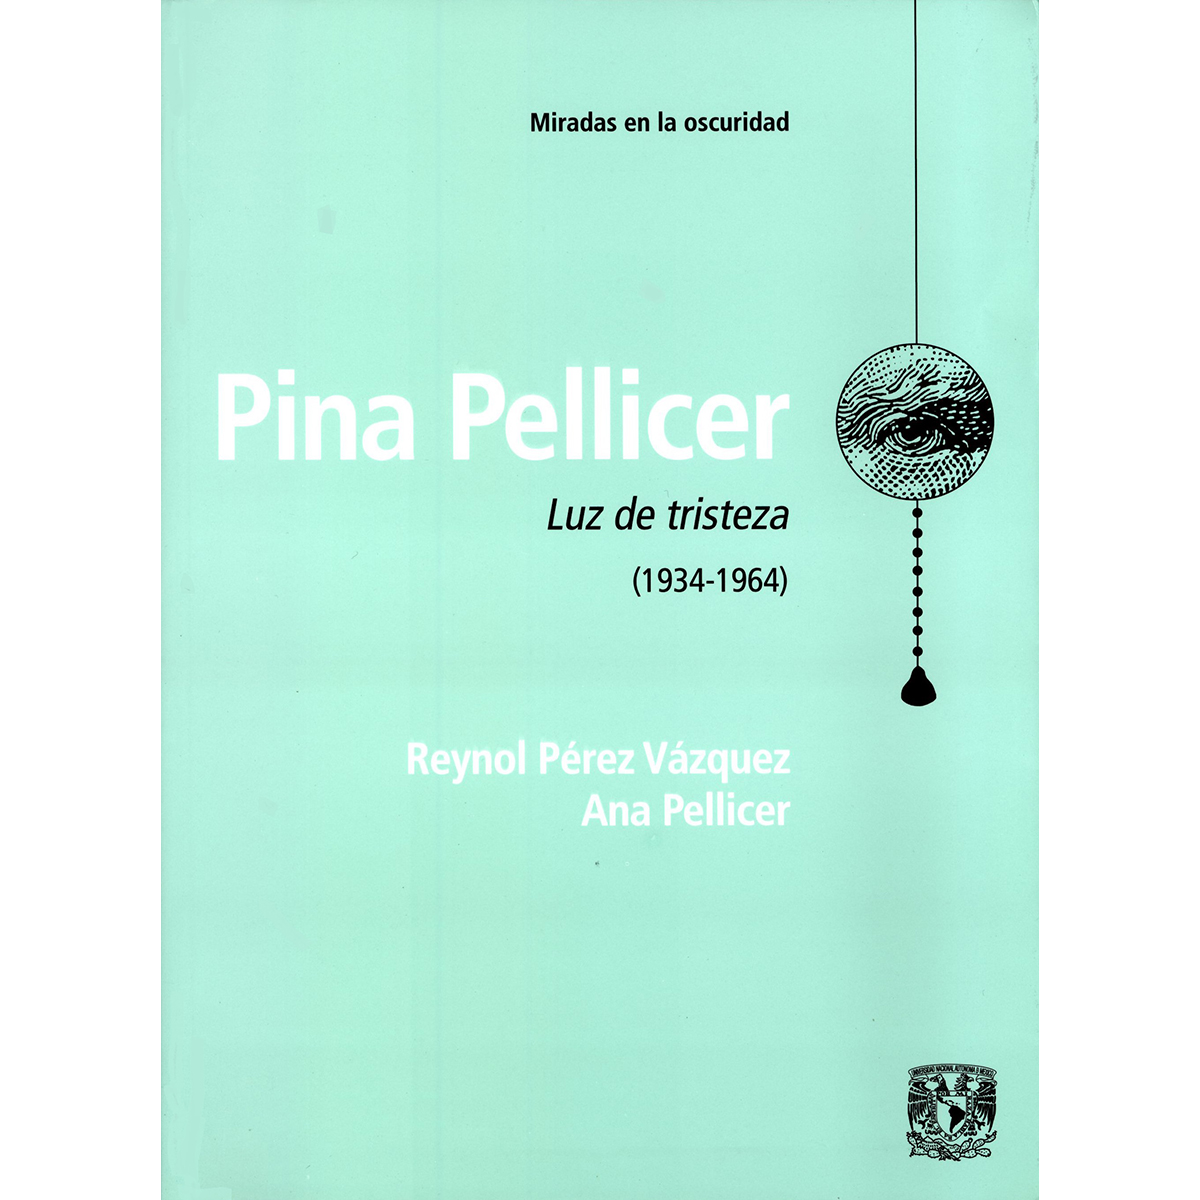 PINA PELLICER. LUZ DE TRISTEZA 1934-1964